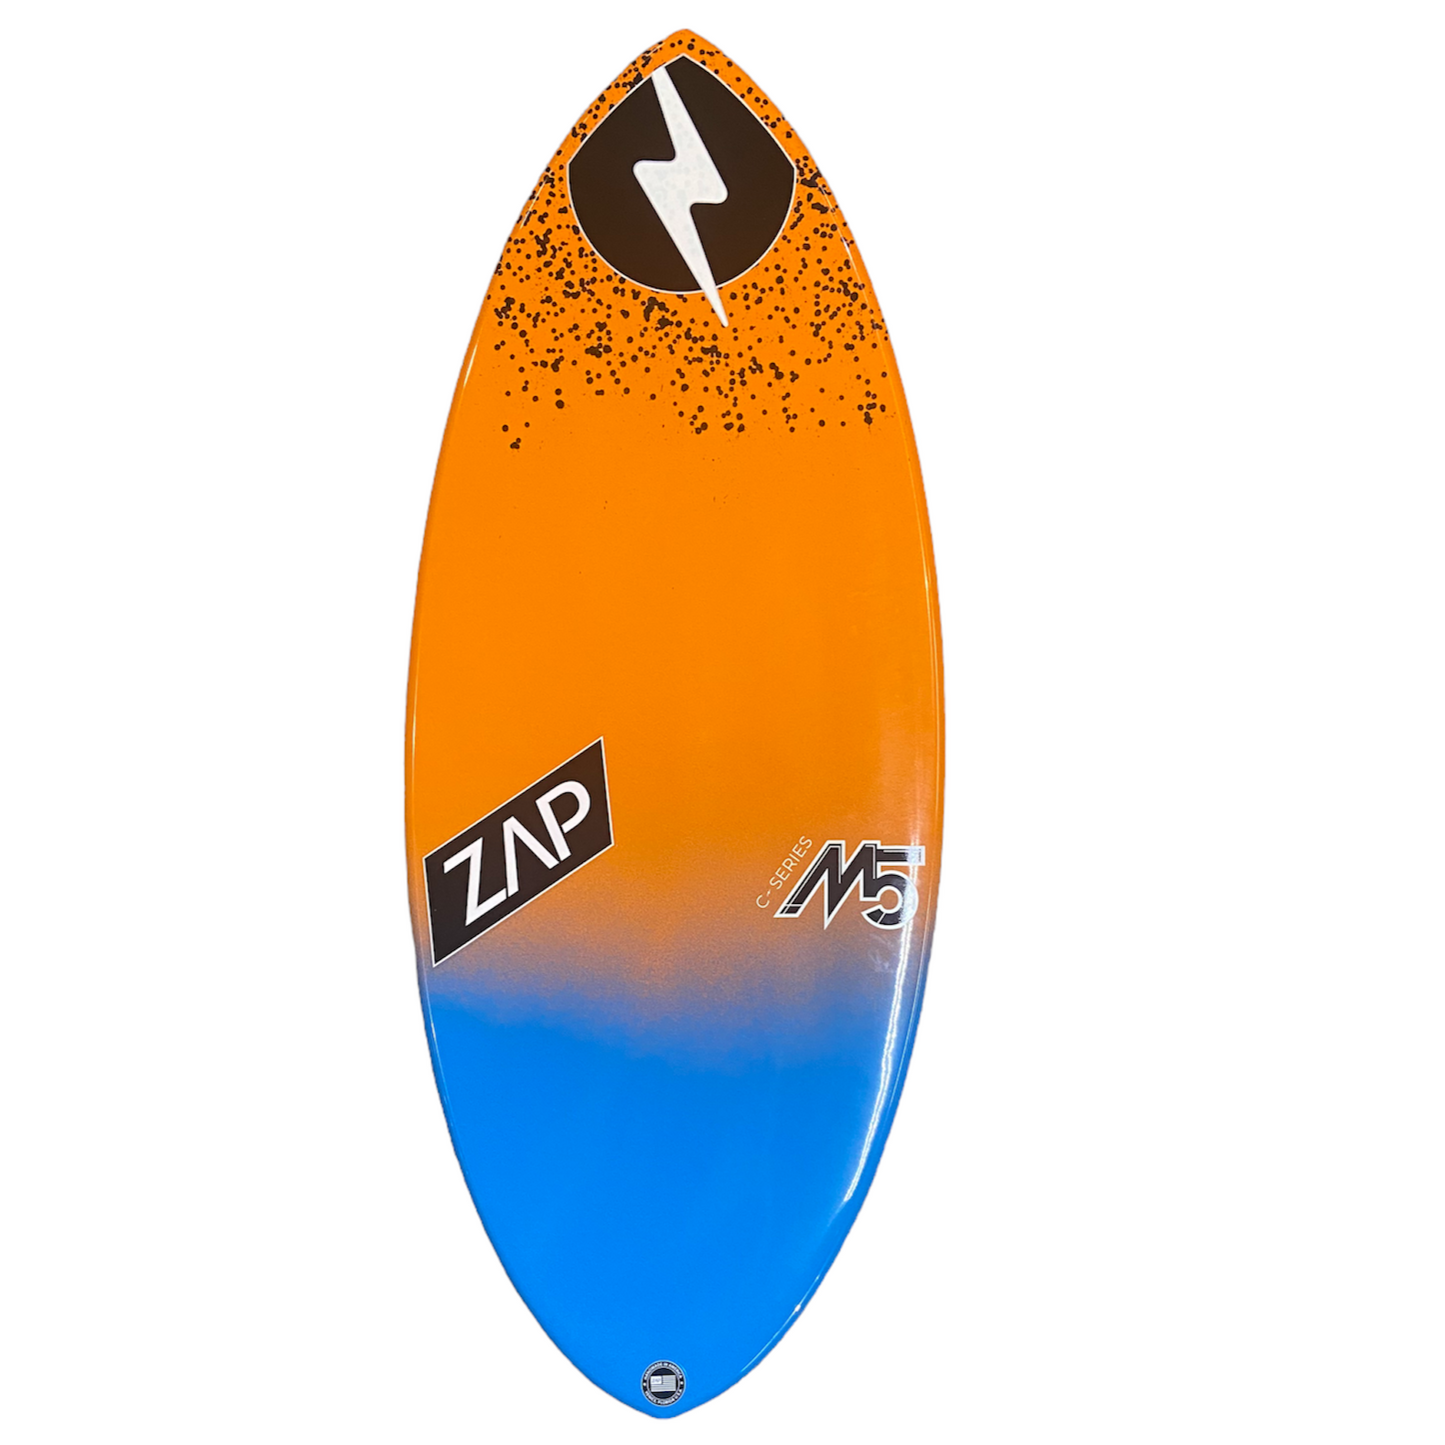 Zap M5 Skim board 51" skimboard